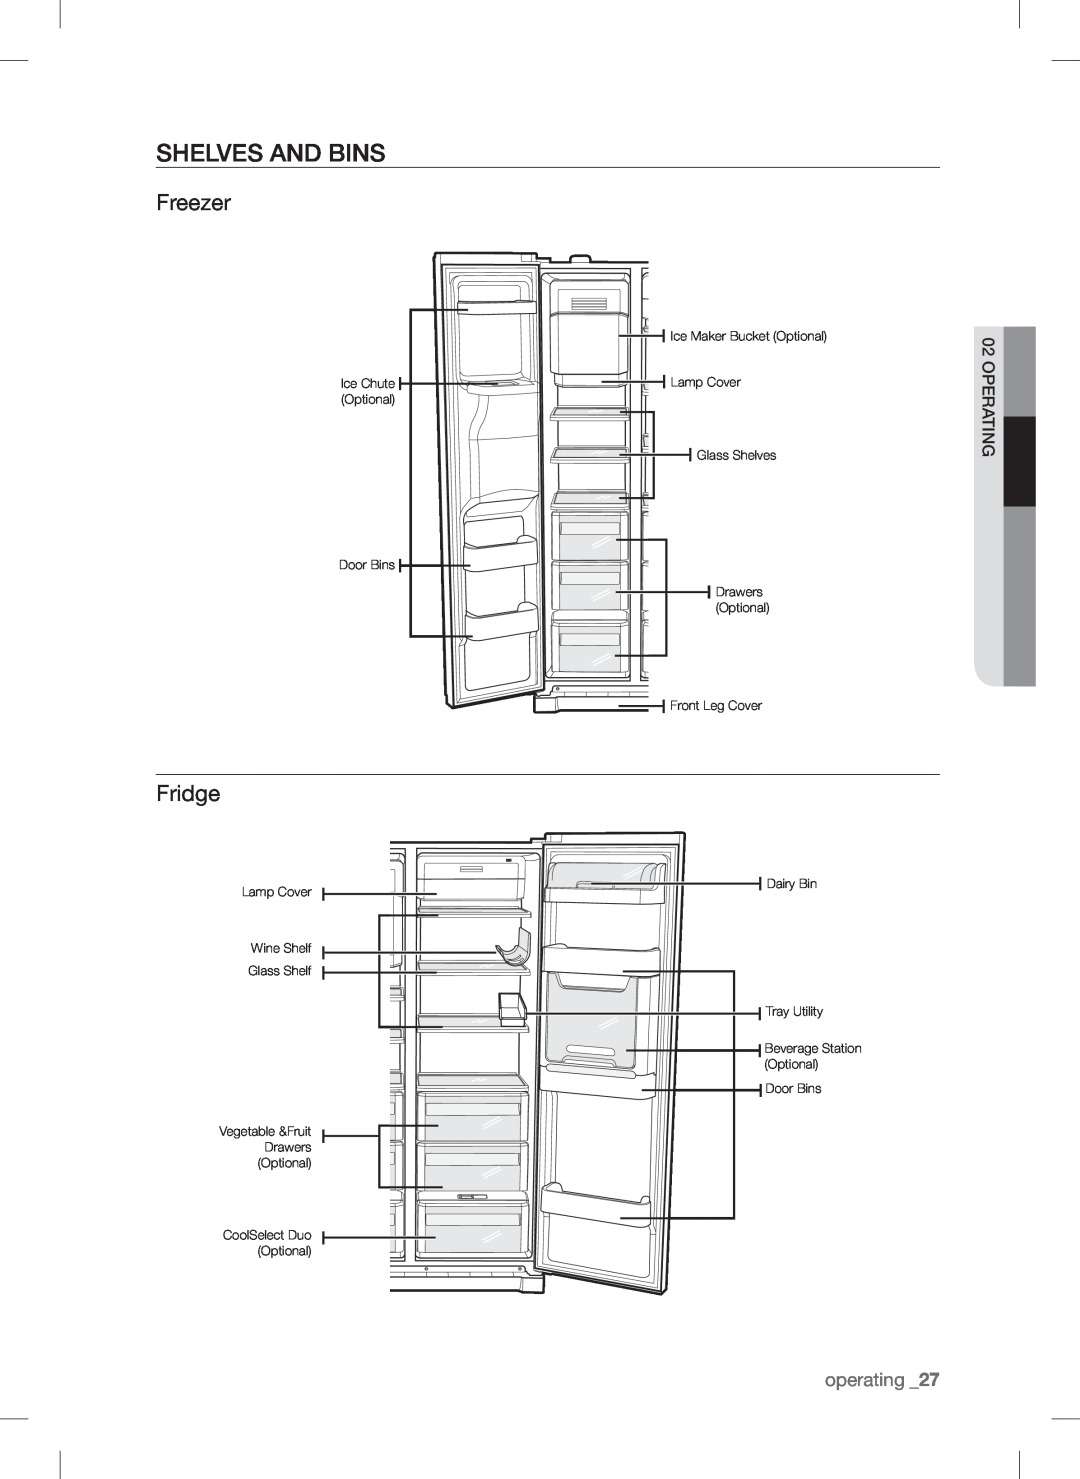 Samsung RSA1N*** Shelves and bins, Freezer, Fridge, operating, Lamp Cover, CoolSelect Duo Optional, Dairy Bin, Door Bins 